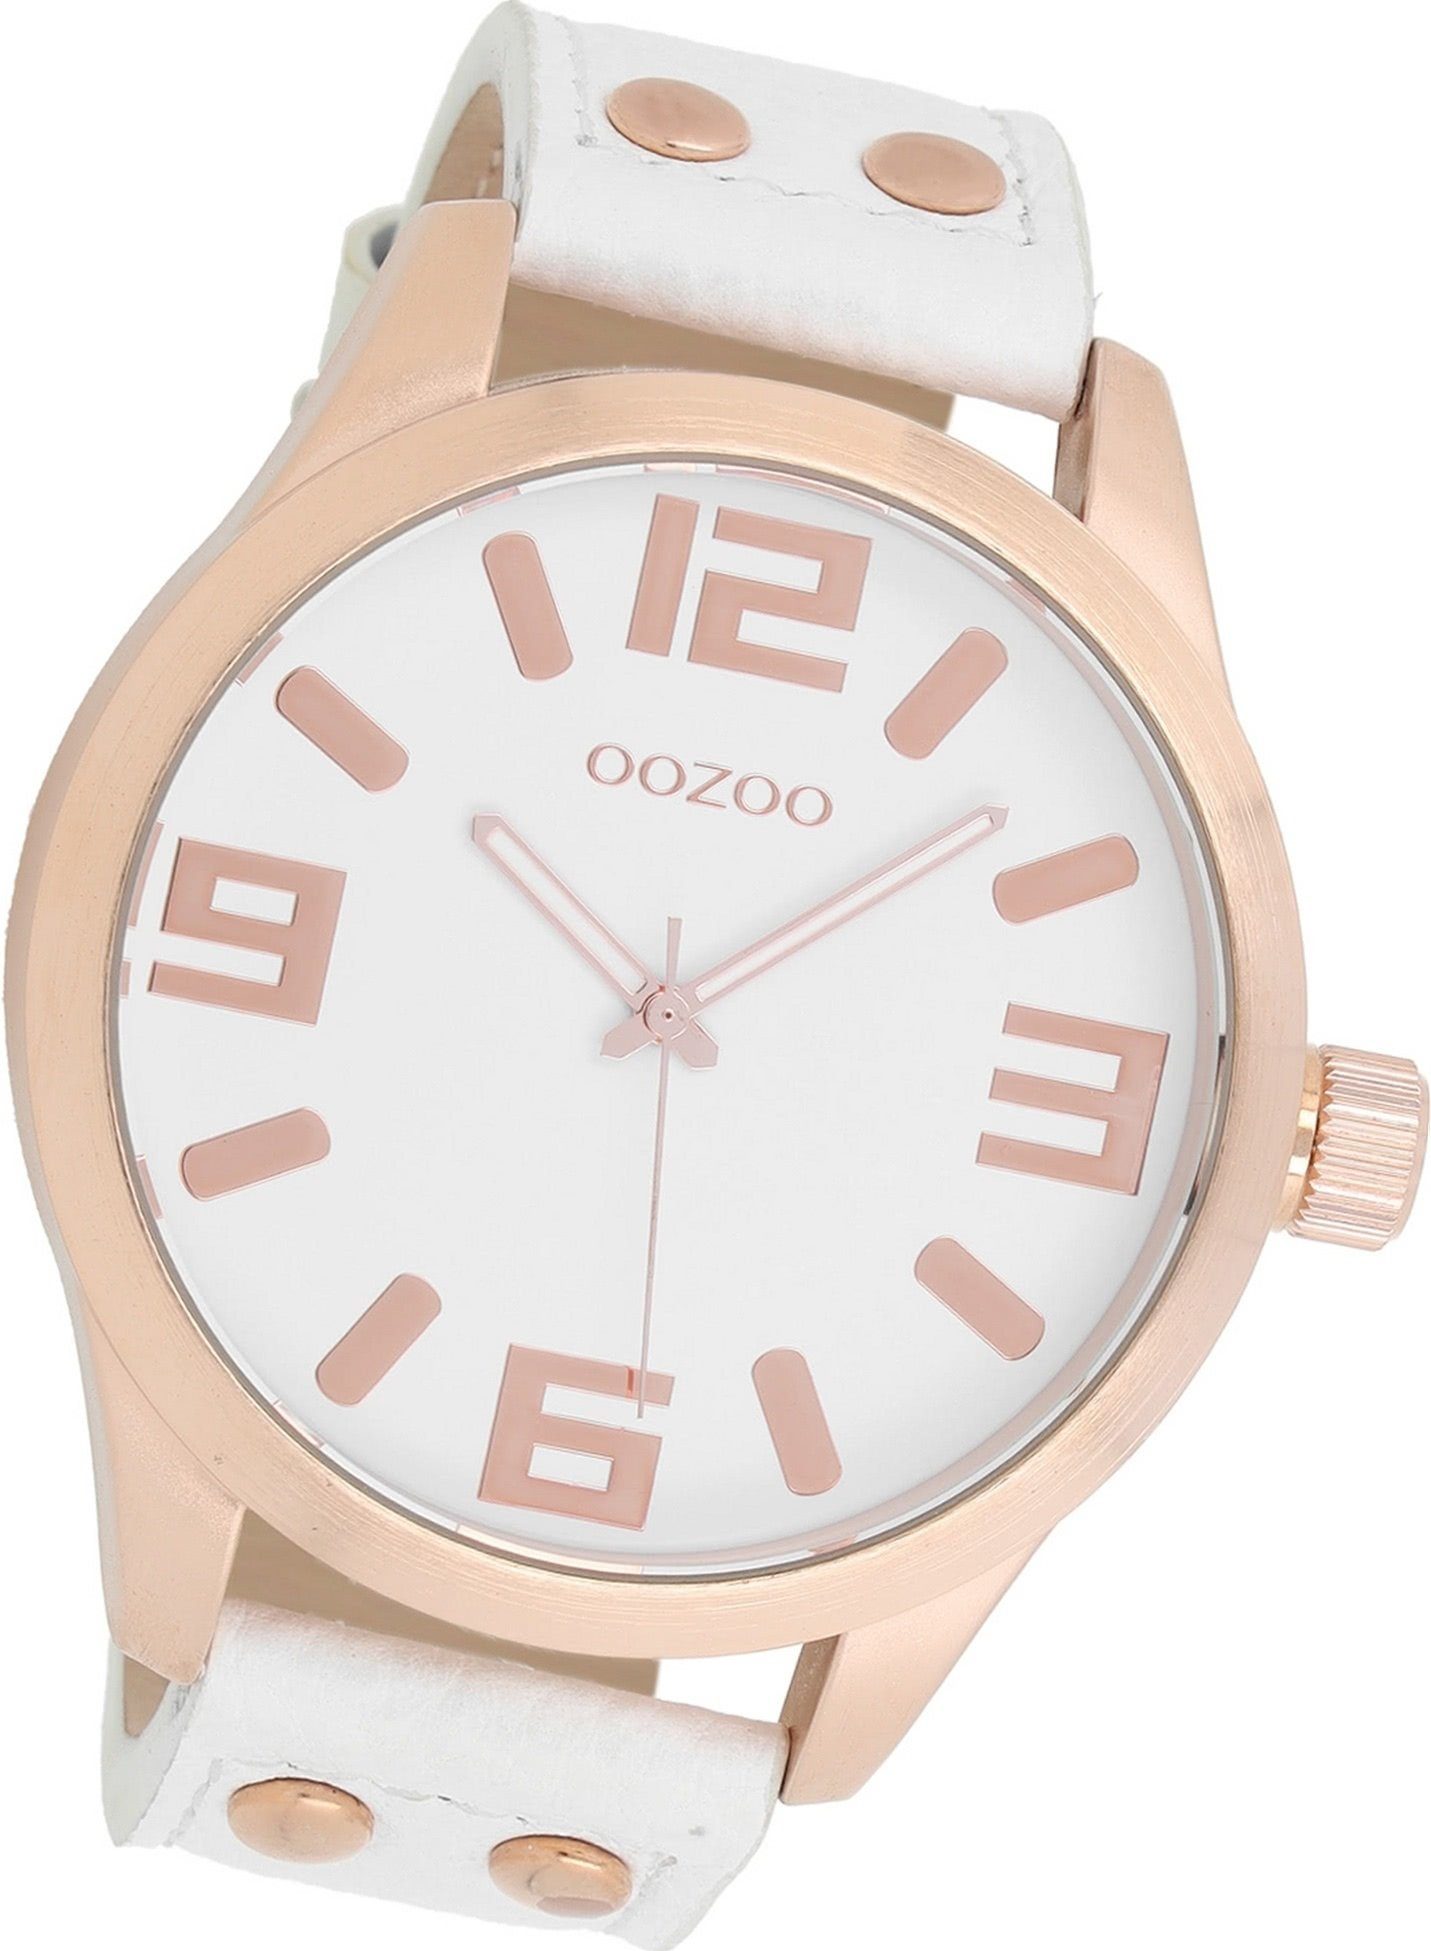 OOZOO Quarzuhr Oozoo Damen Armbanduhr Timepieces, (Analoguhr), Damenuhr Lederarmband weiß, rosegold, rundes Gehäuse, groß (ca. 51mm)